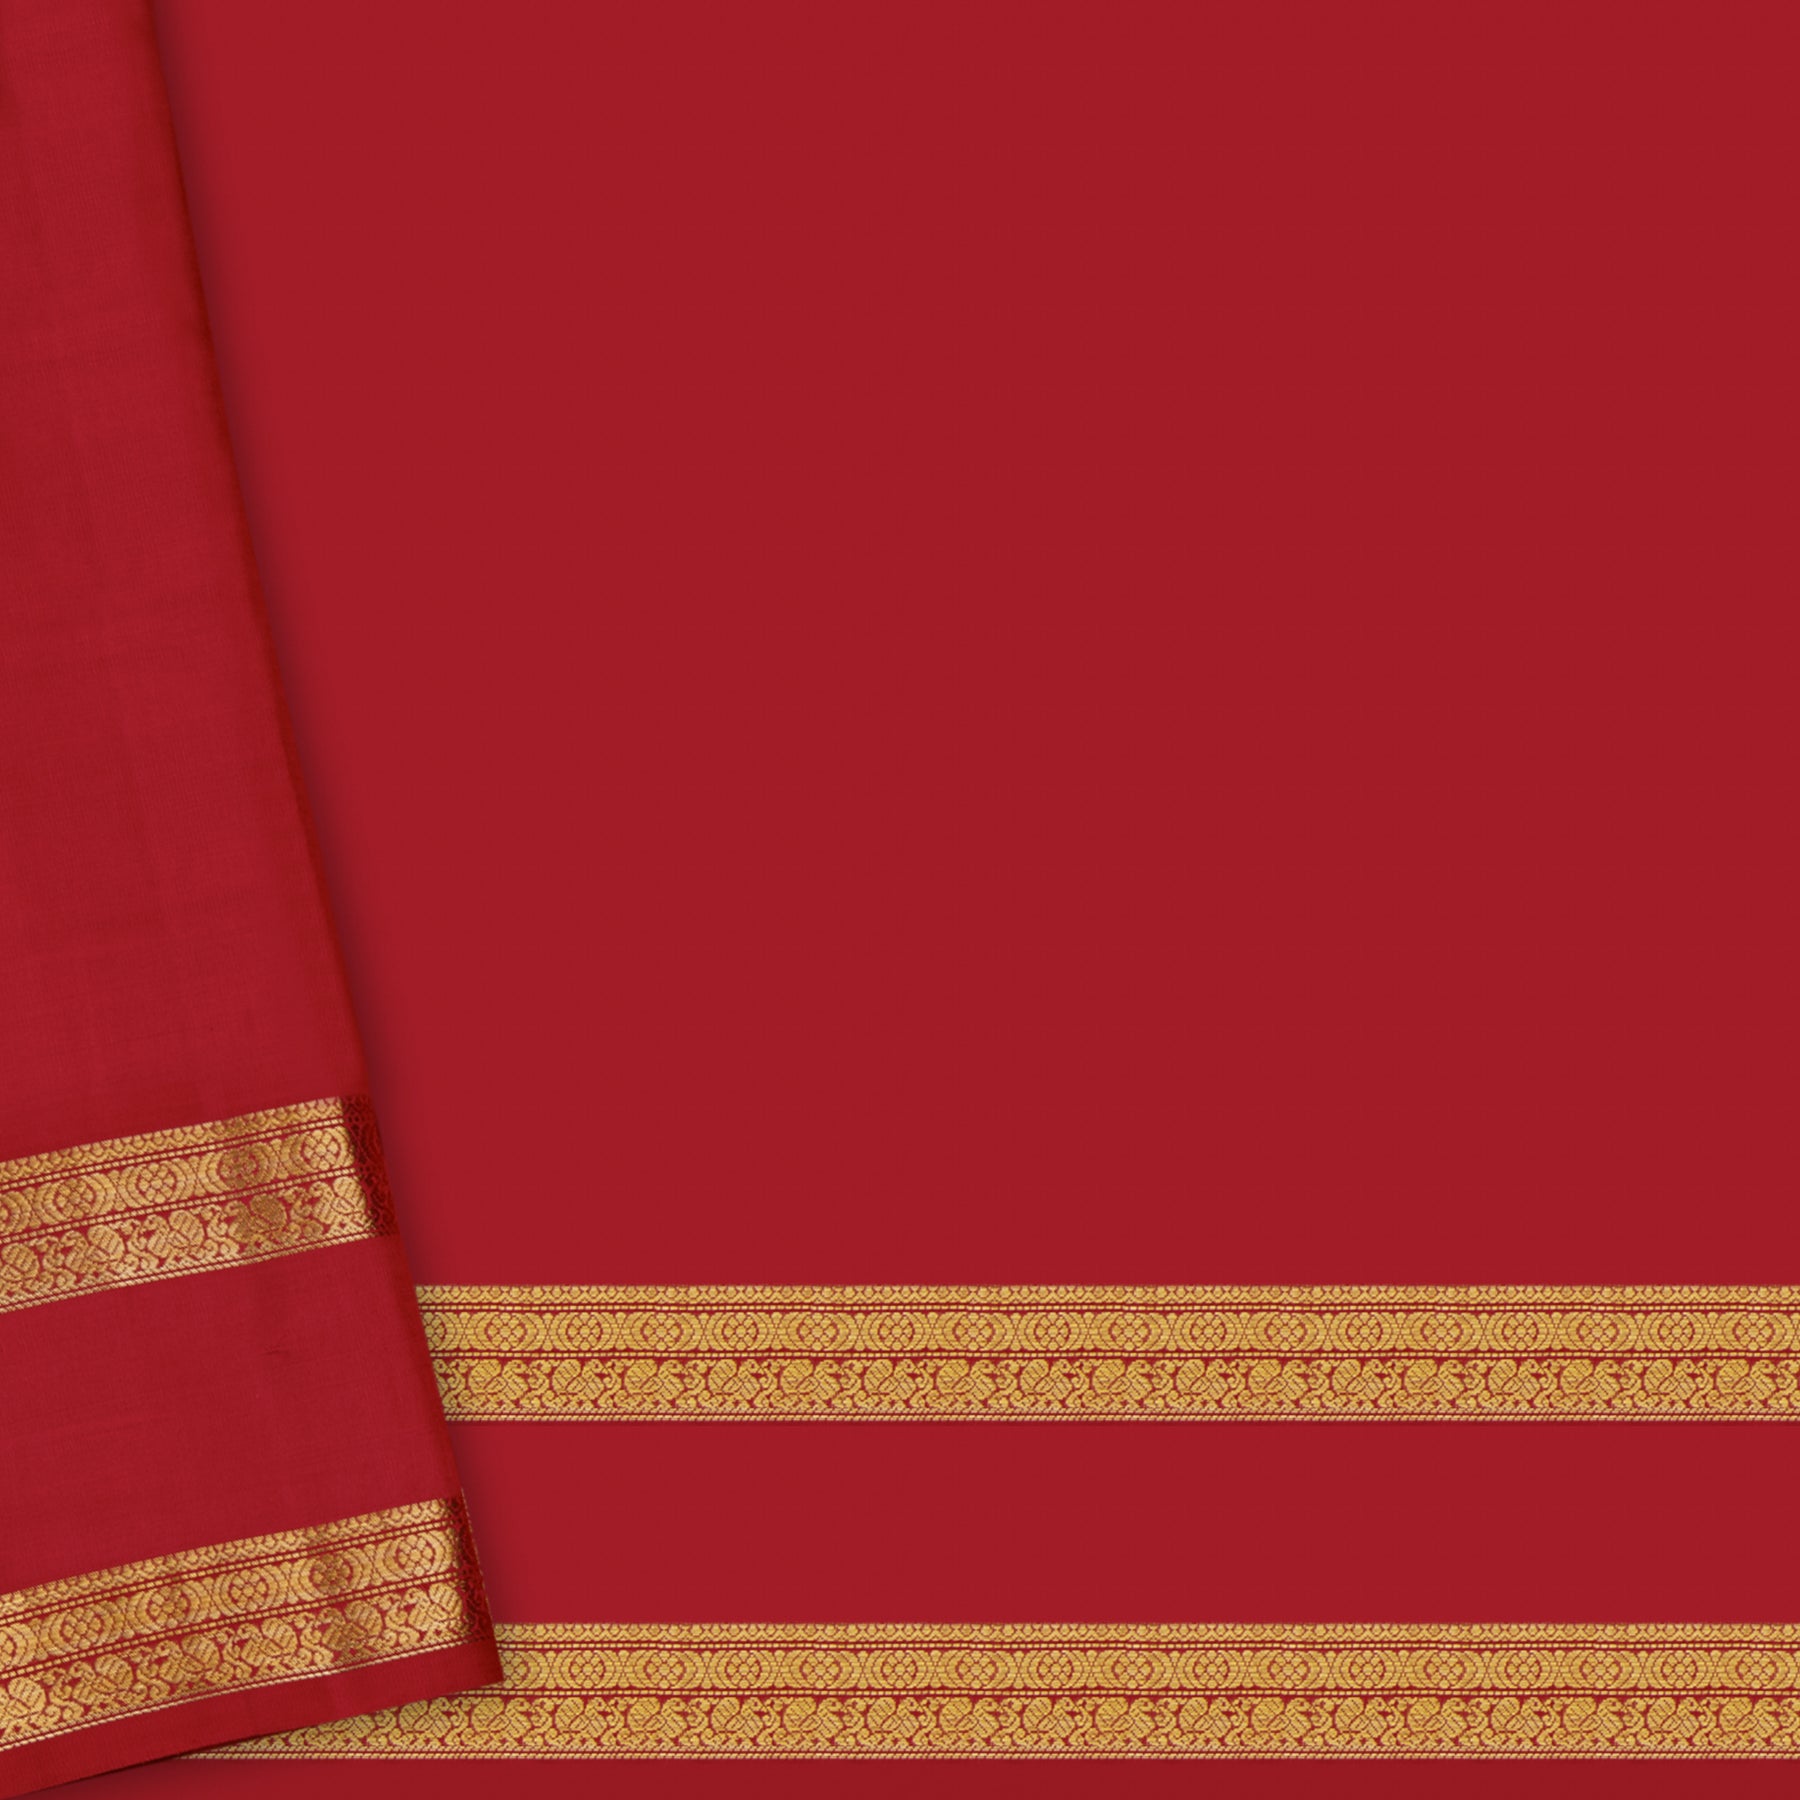 Kanakavalli Kanjivaram Silk Sari 23-595-HS001-10660 - Blouse View